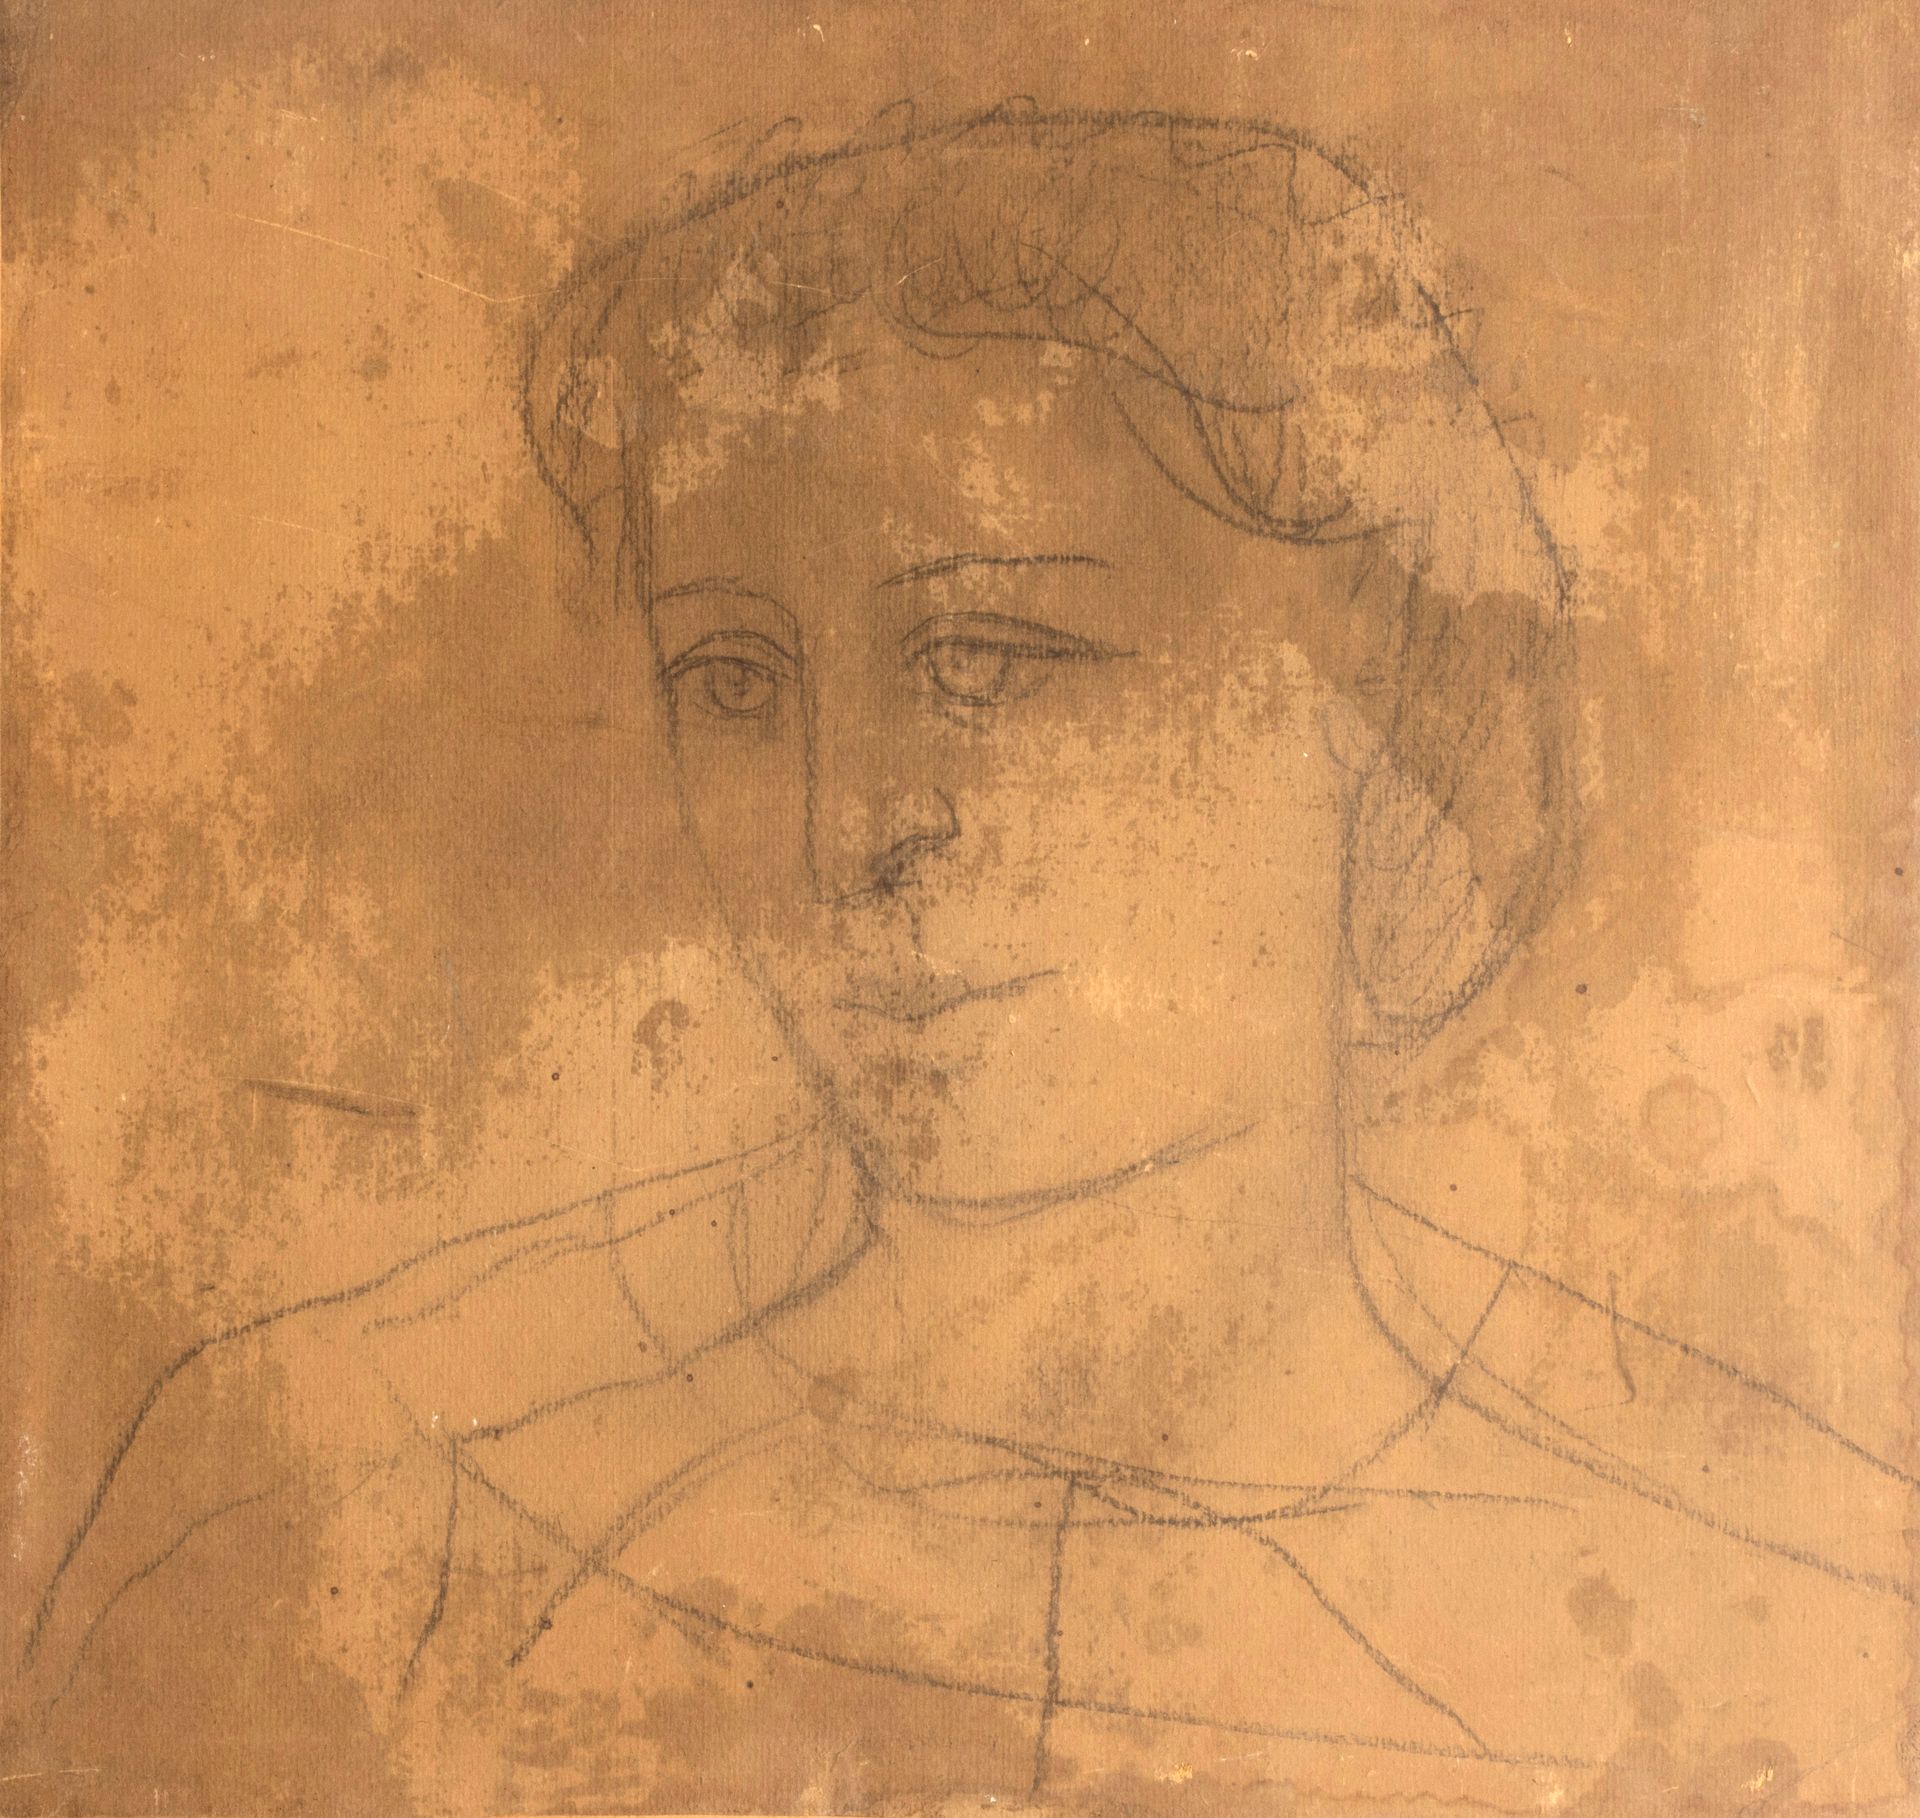 PIERRE TAL COAT (1905-1985) 一个女人的肖像
纸上木炭，装在画布上，有污点，纸张变色
50 x 52 cm